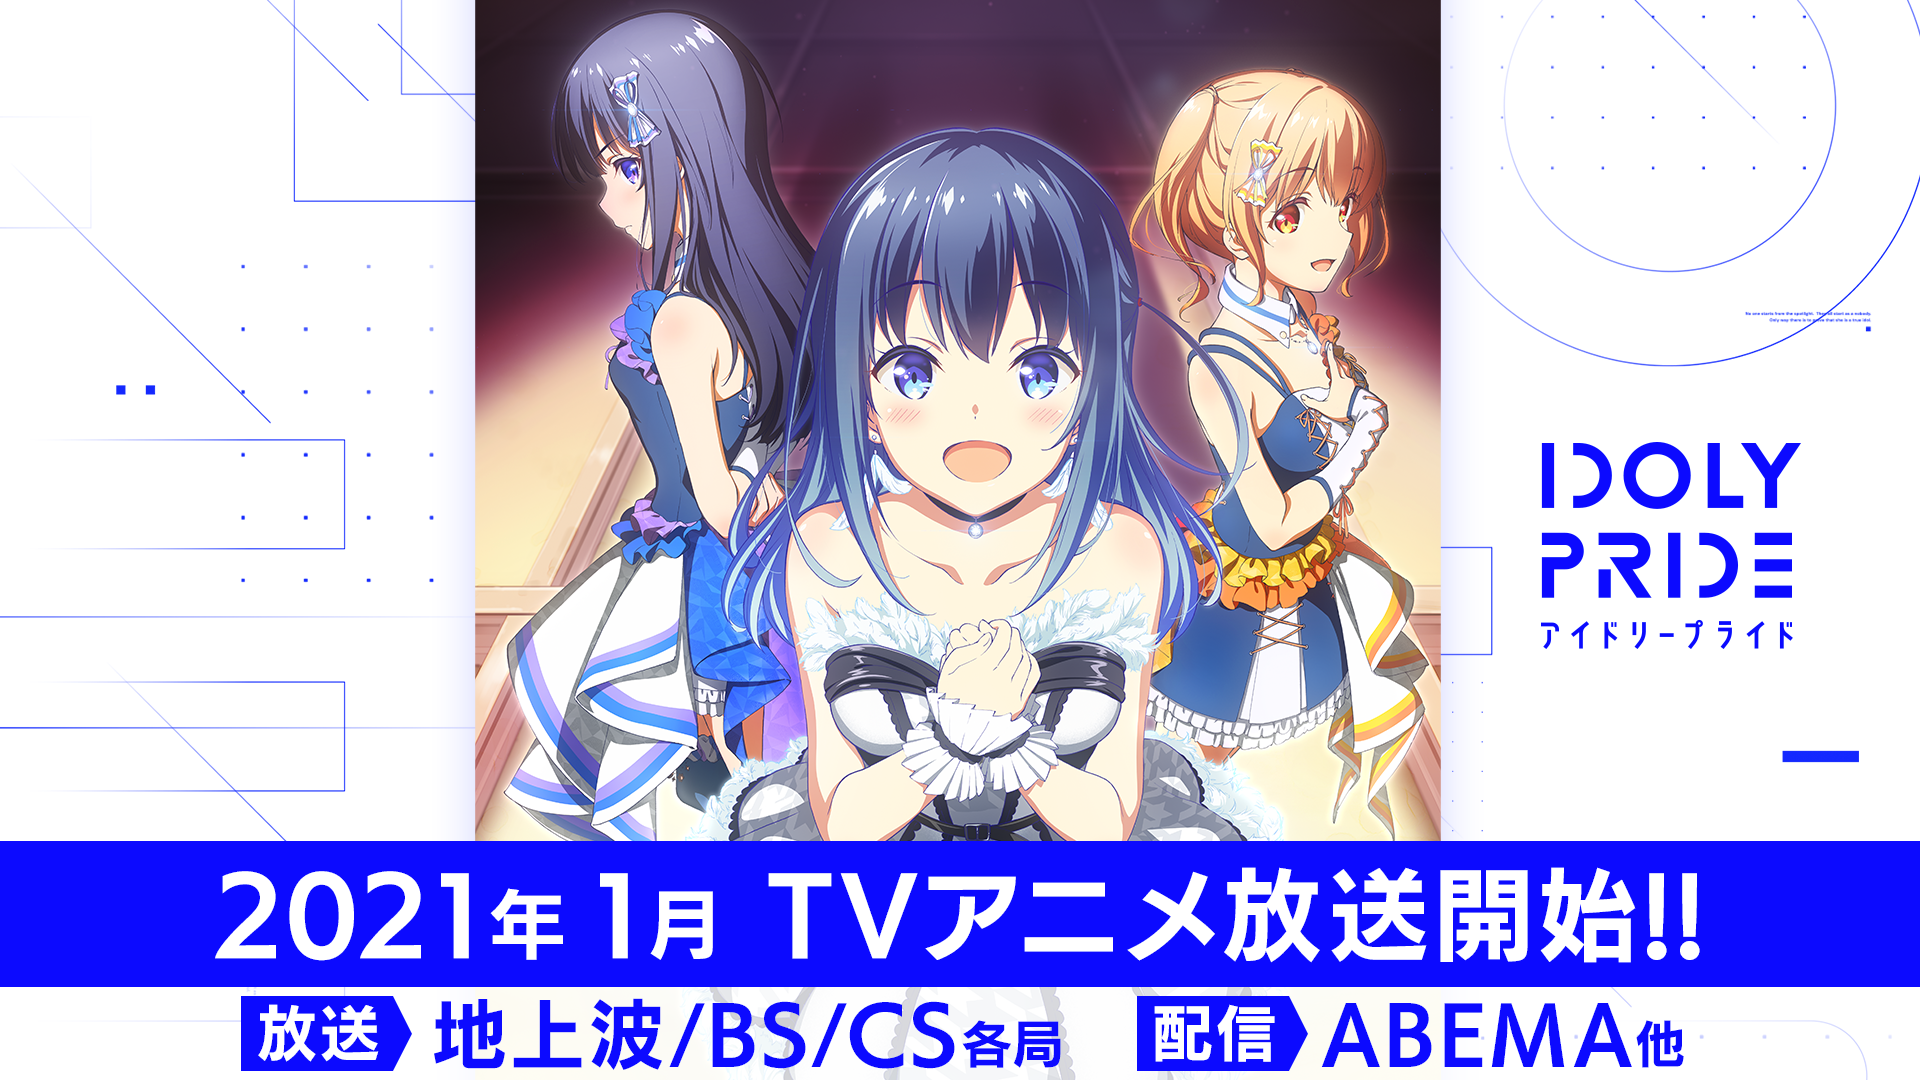 Tvアニメの放送時期が21年1月に決定 Idoly Pride 公式サイト